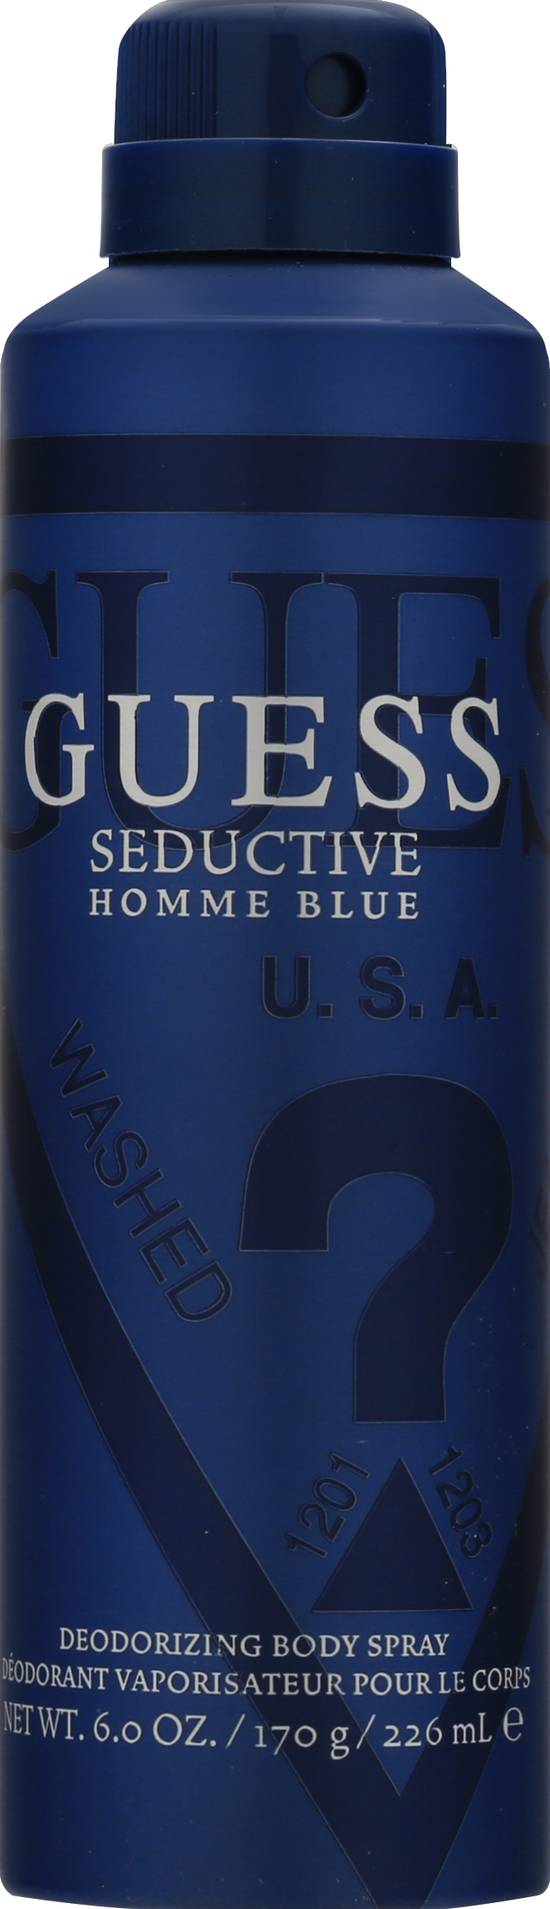 Guess Seductive Homme Blue Deodorizing Body Spray